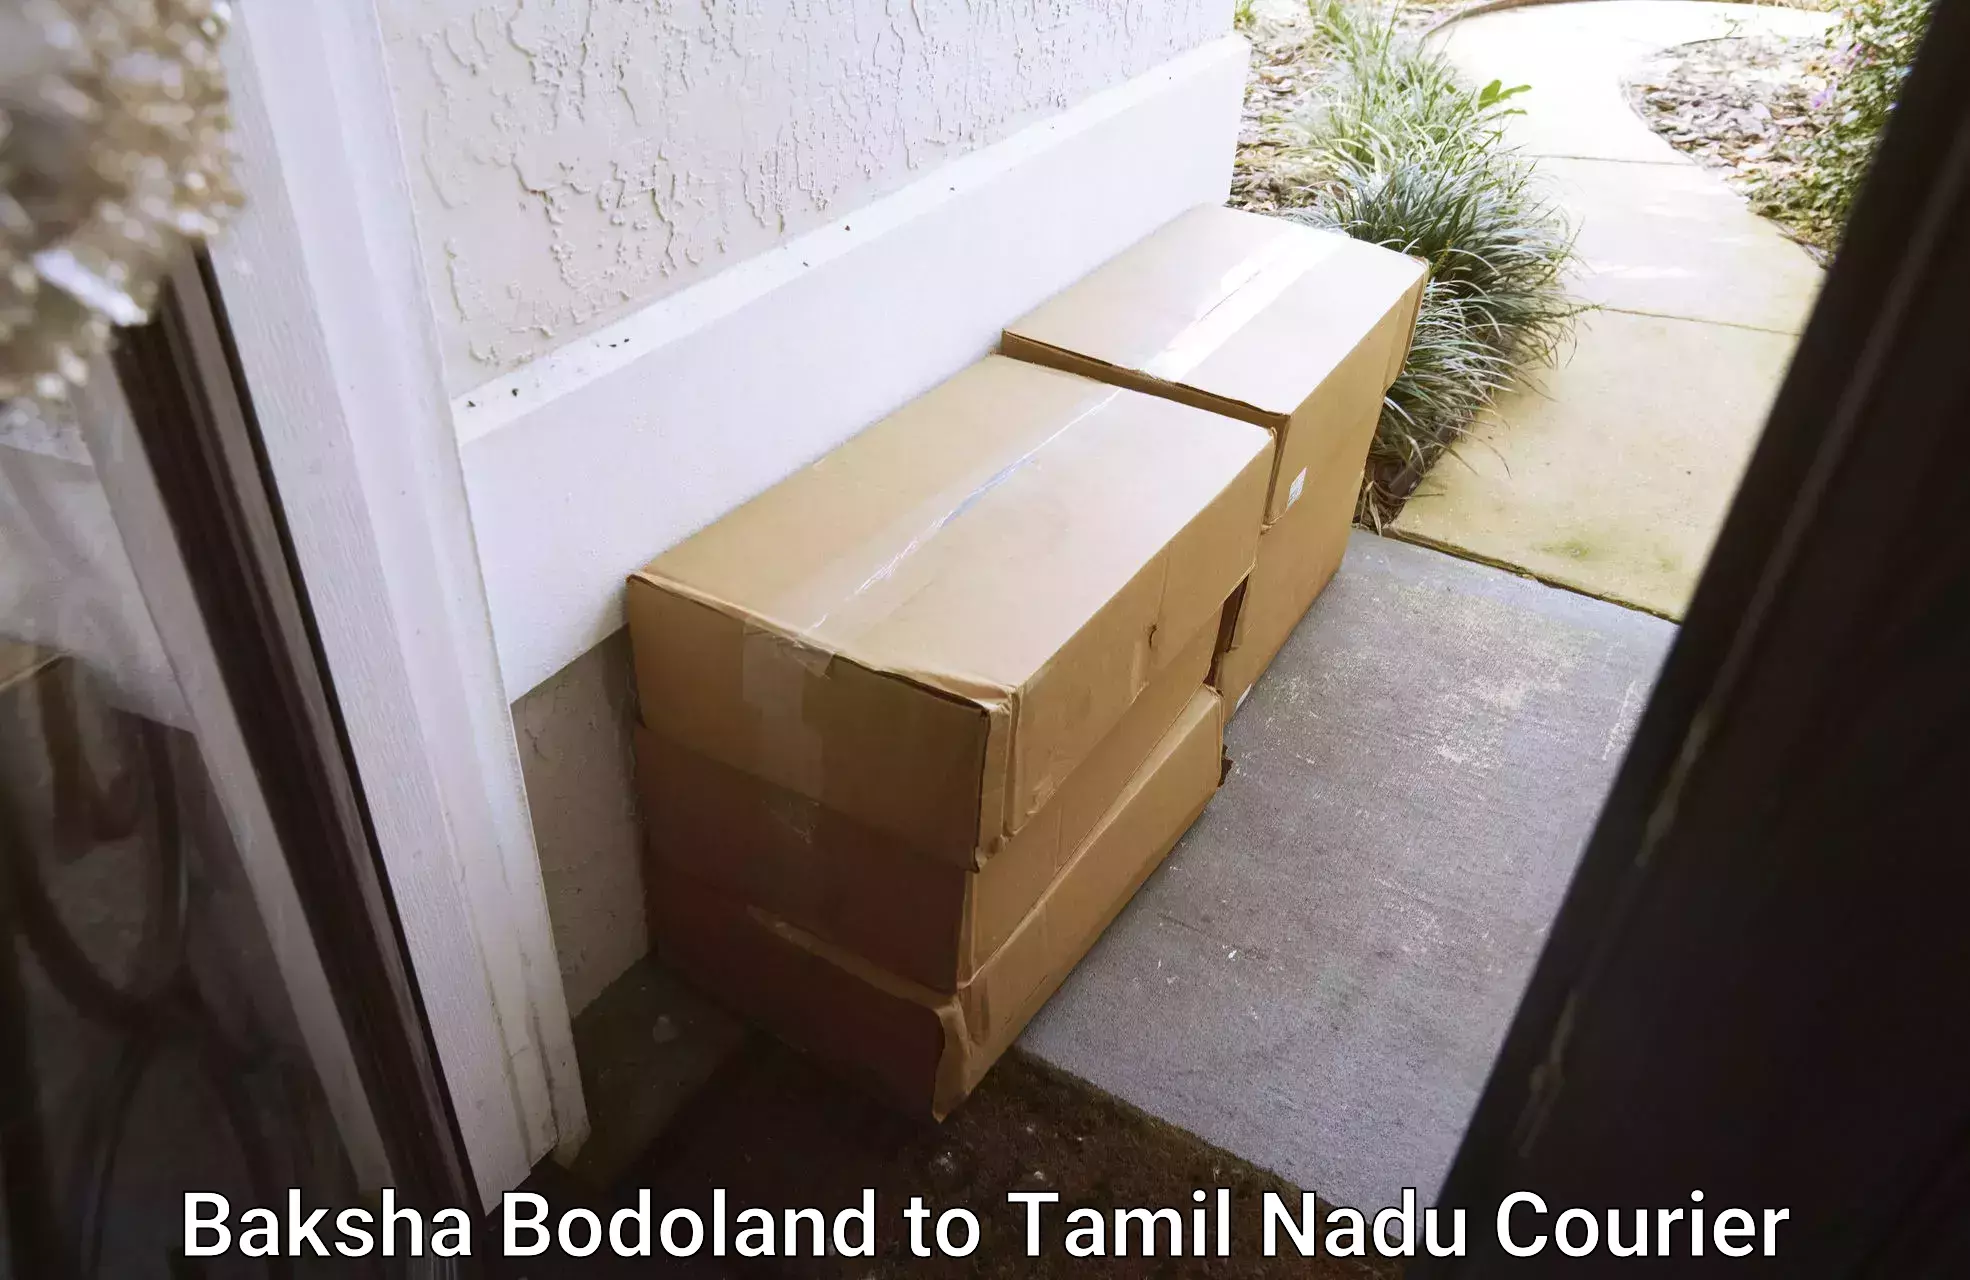 Residential courier service in Baksha Bodoland to Rathinasabapathy Puram